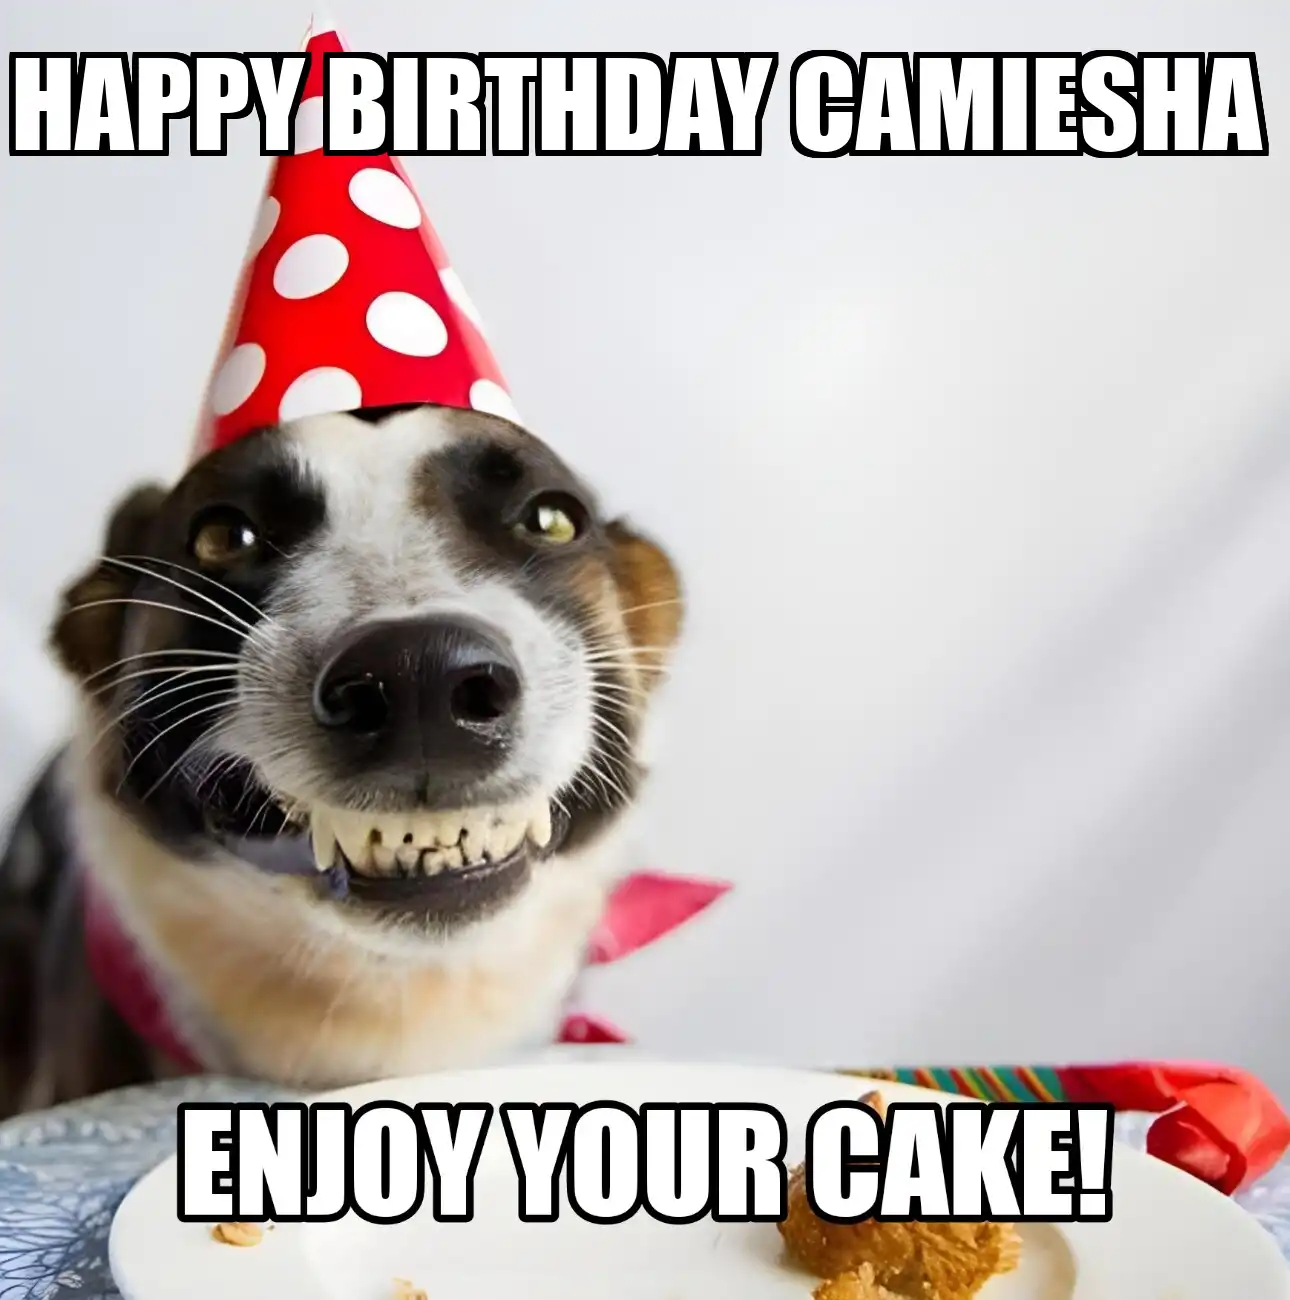 Happy Birthday Camiesha Enjoy Your Cake Dog Meme